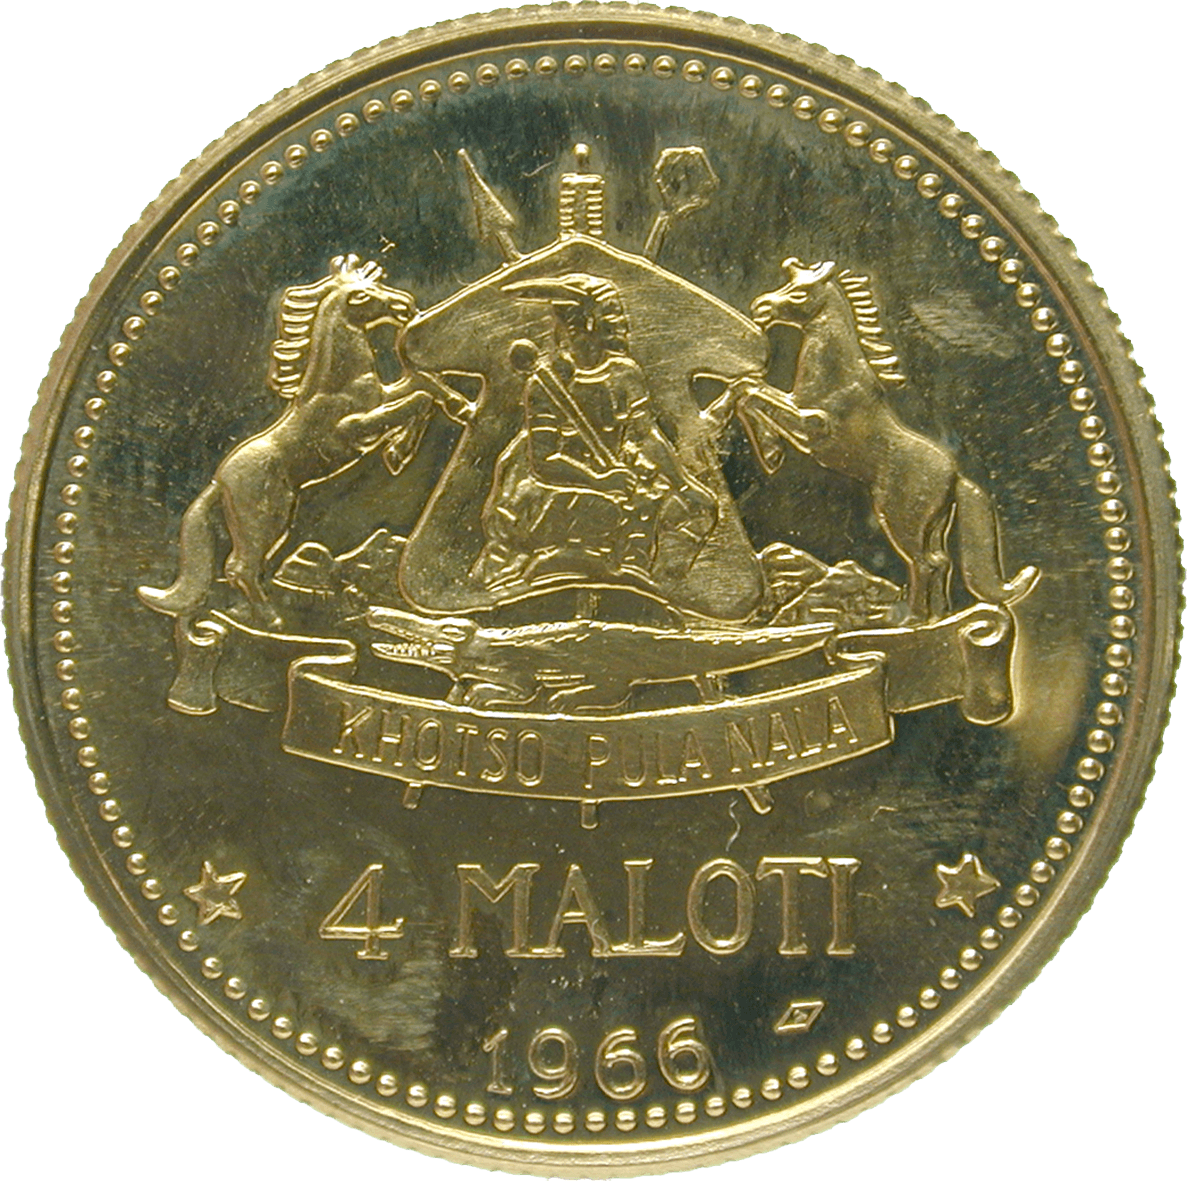 Königreich Lesotho, Moshoeshoe II., 4 Maloti 1966 (reverse)